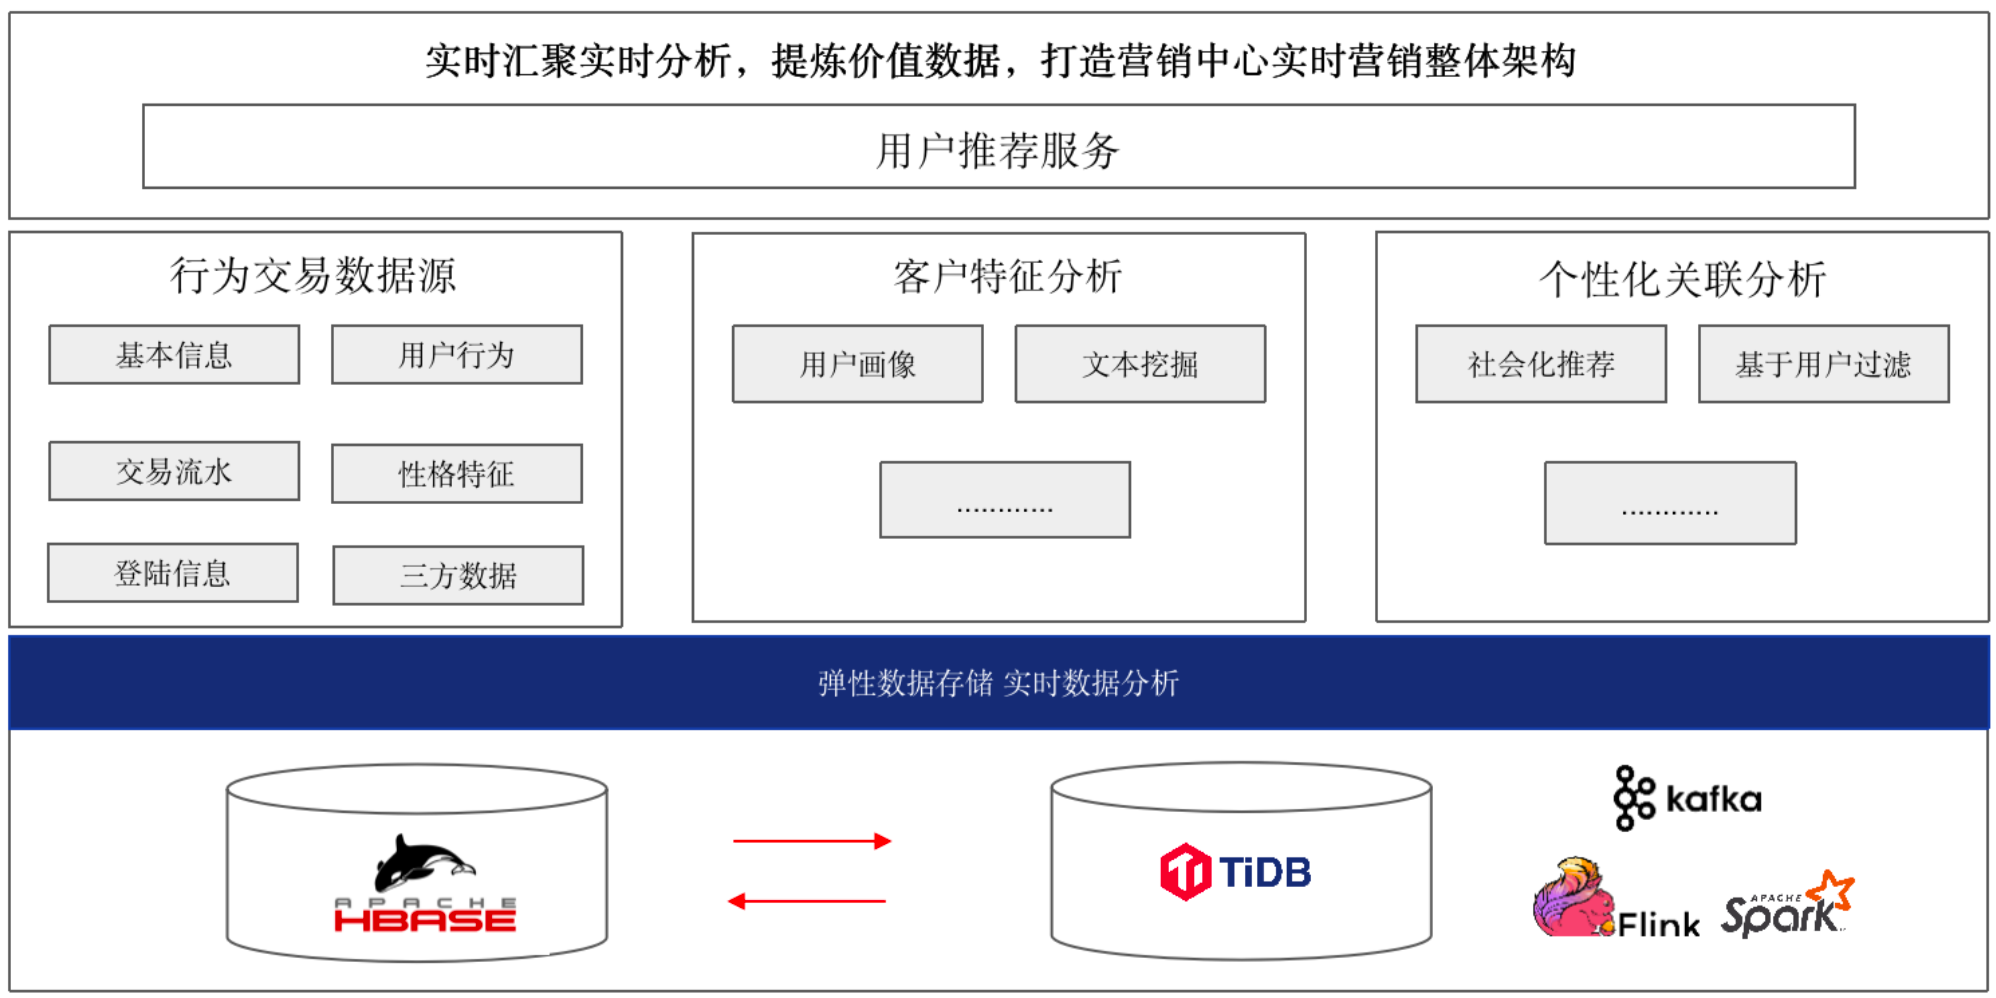 TiDB 实时营销解决方案.png